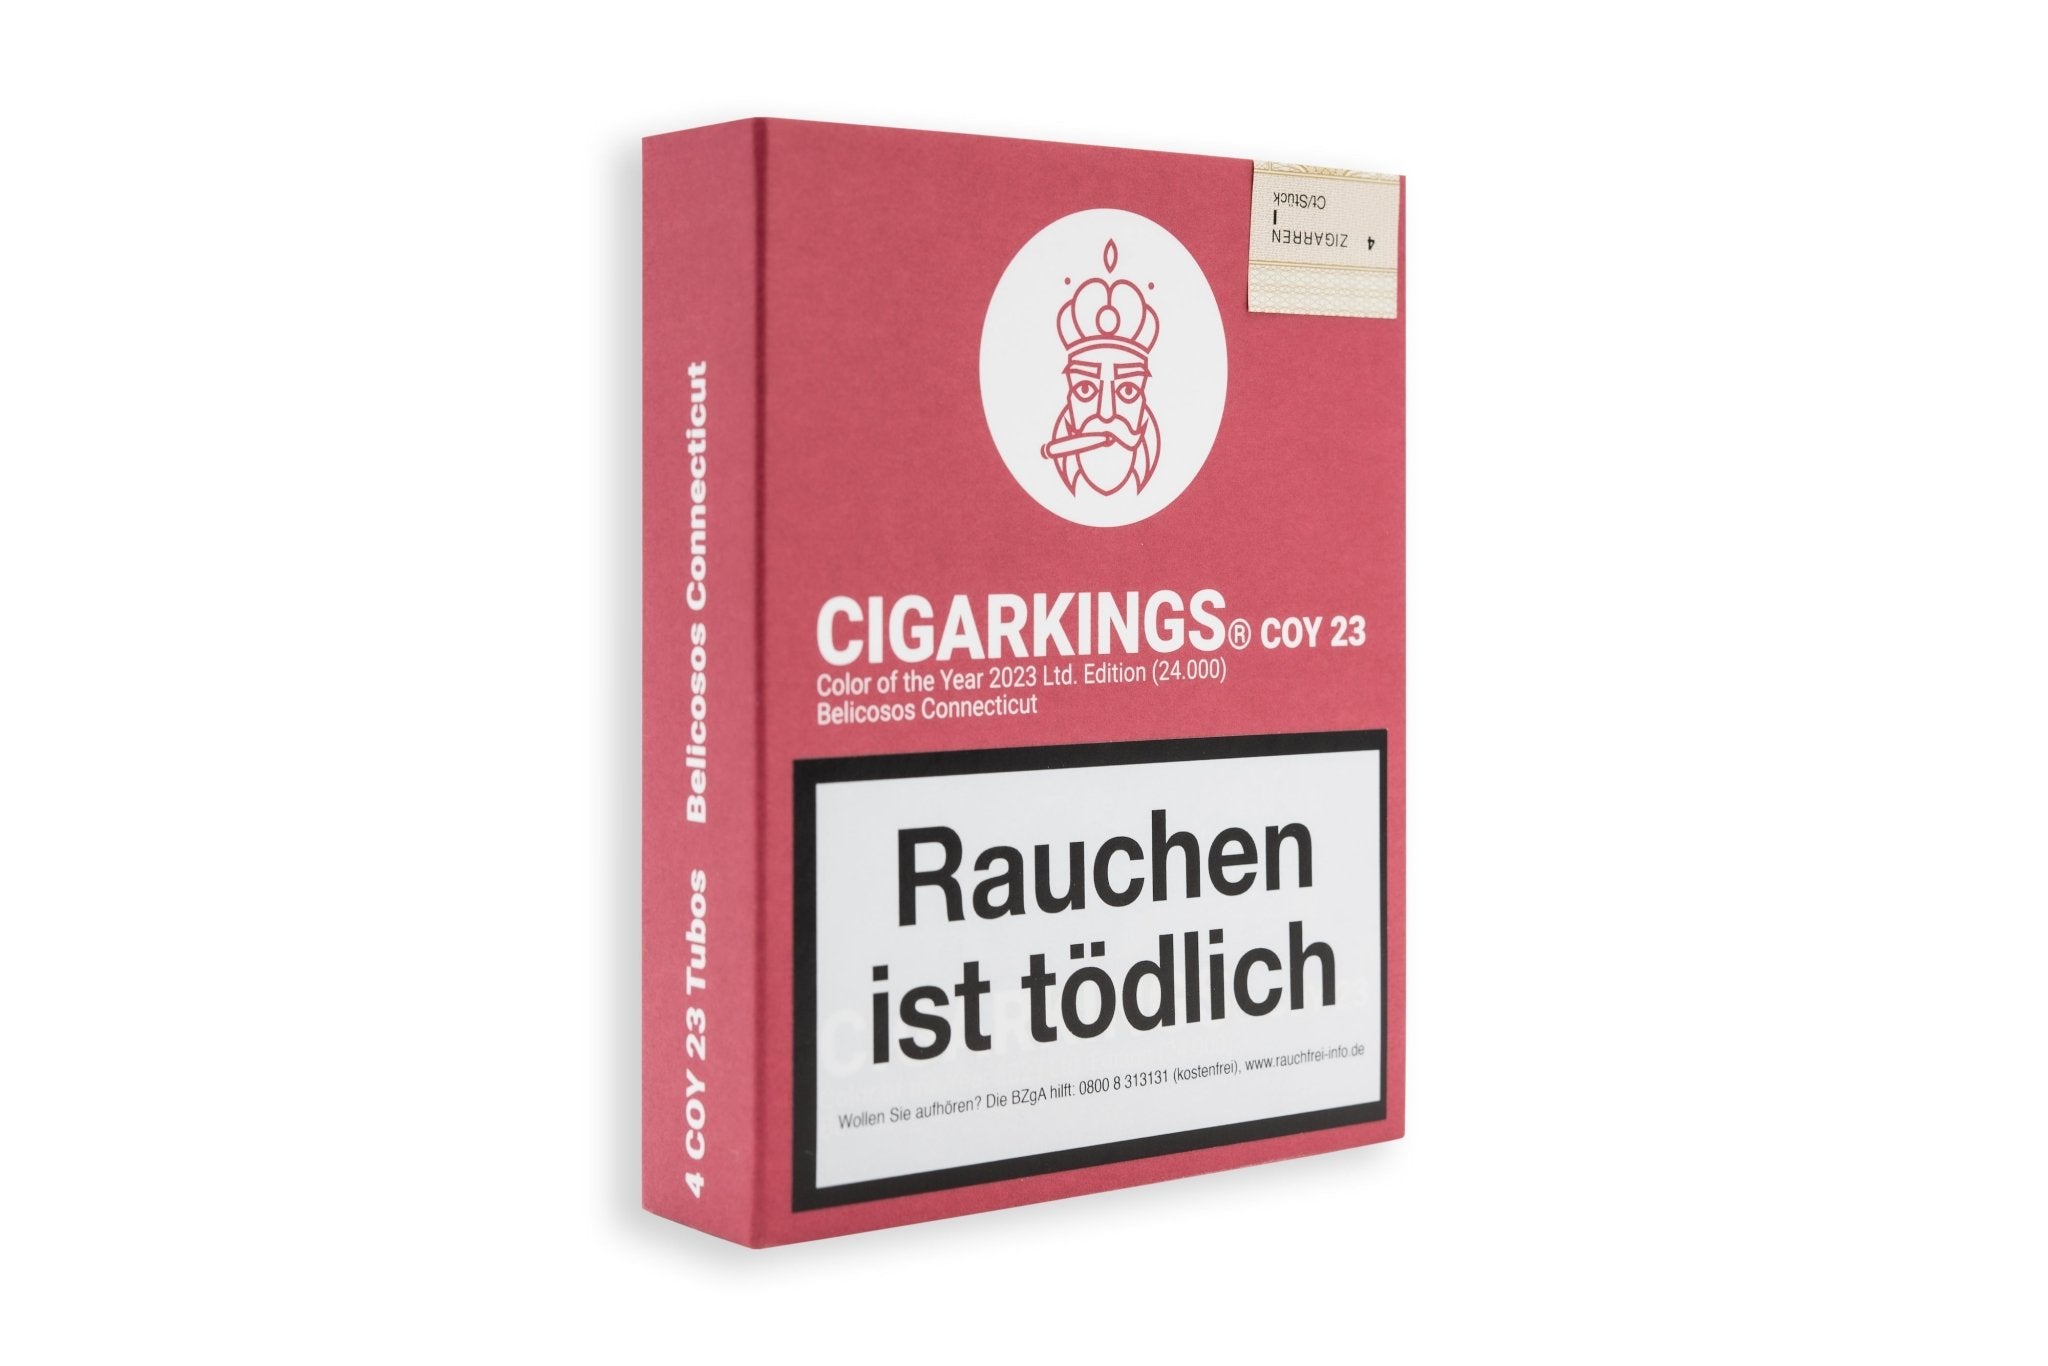 COY 23 Tubos - CigarKings GmbH